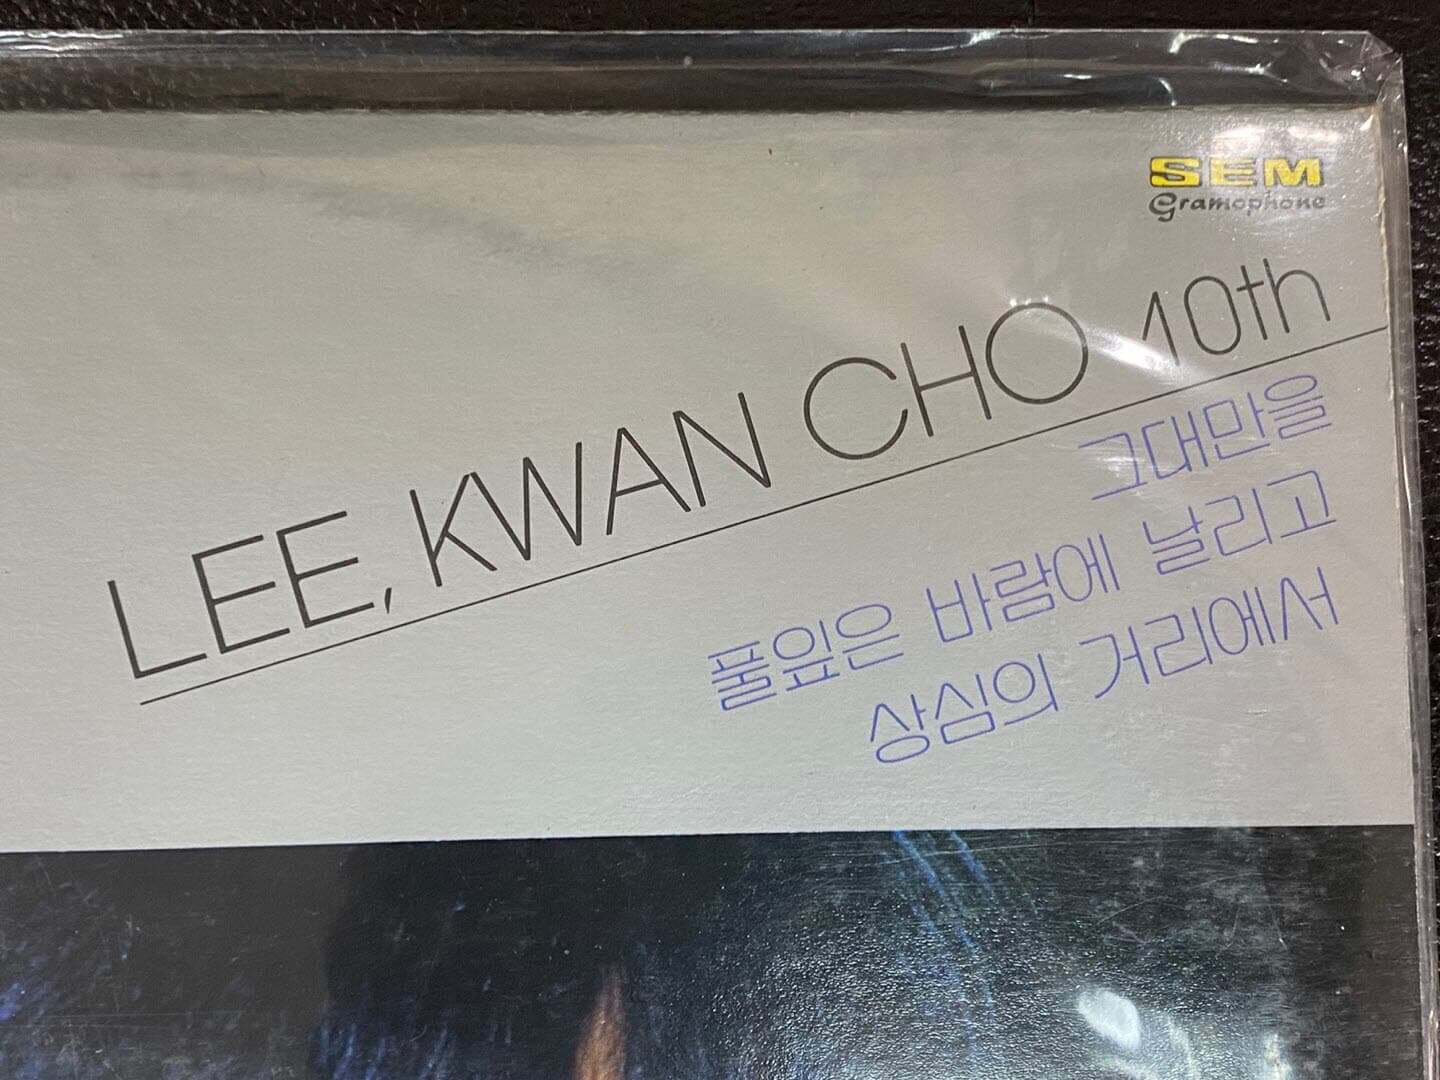 [LP] 이광조 - 10집 Lee, Kwan Cho 10Th (그대만을) LP [미개봉] [성음 SEL-RS 179]